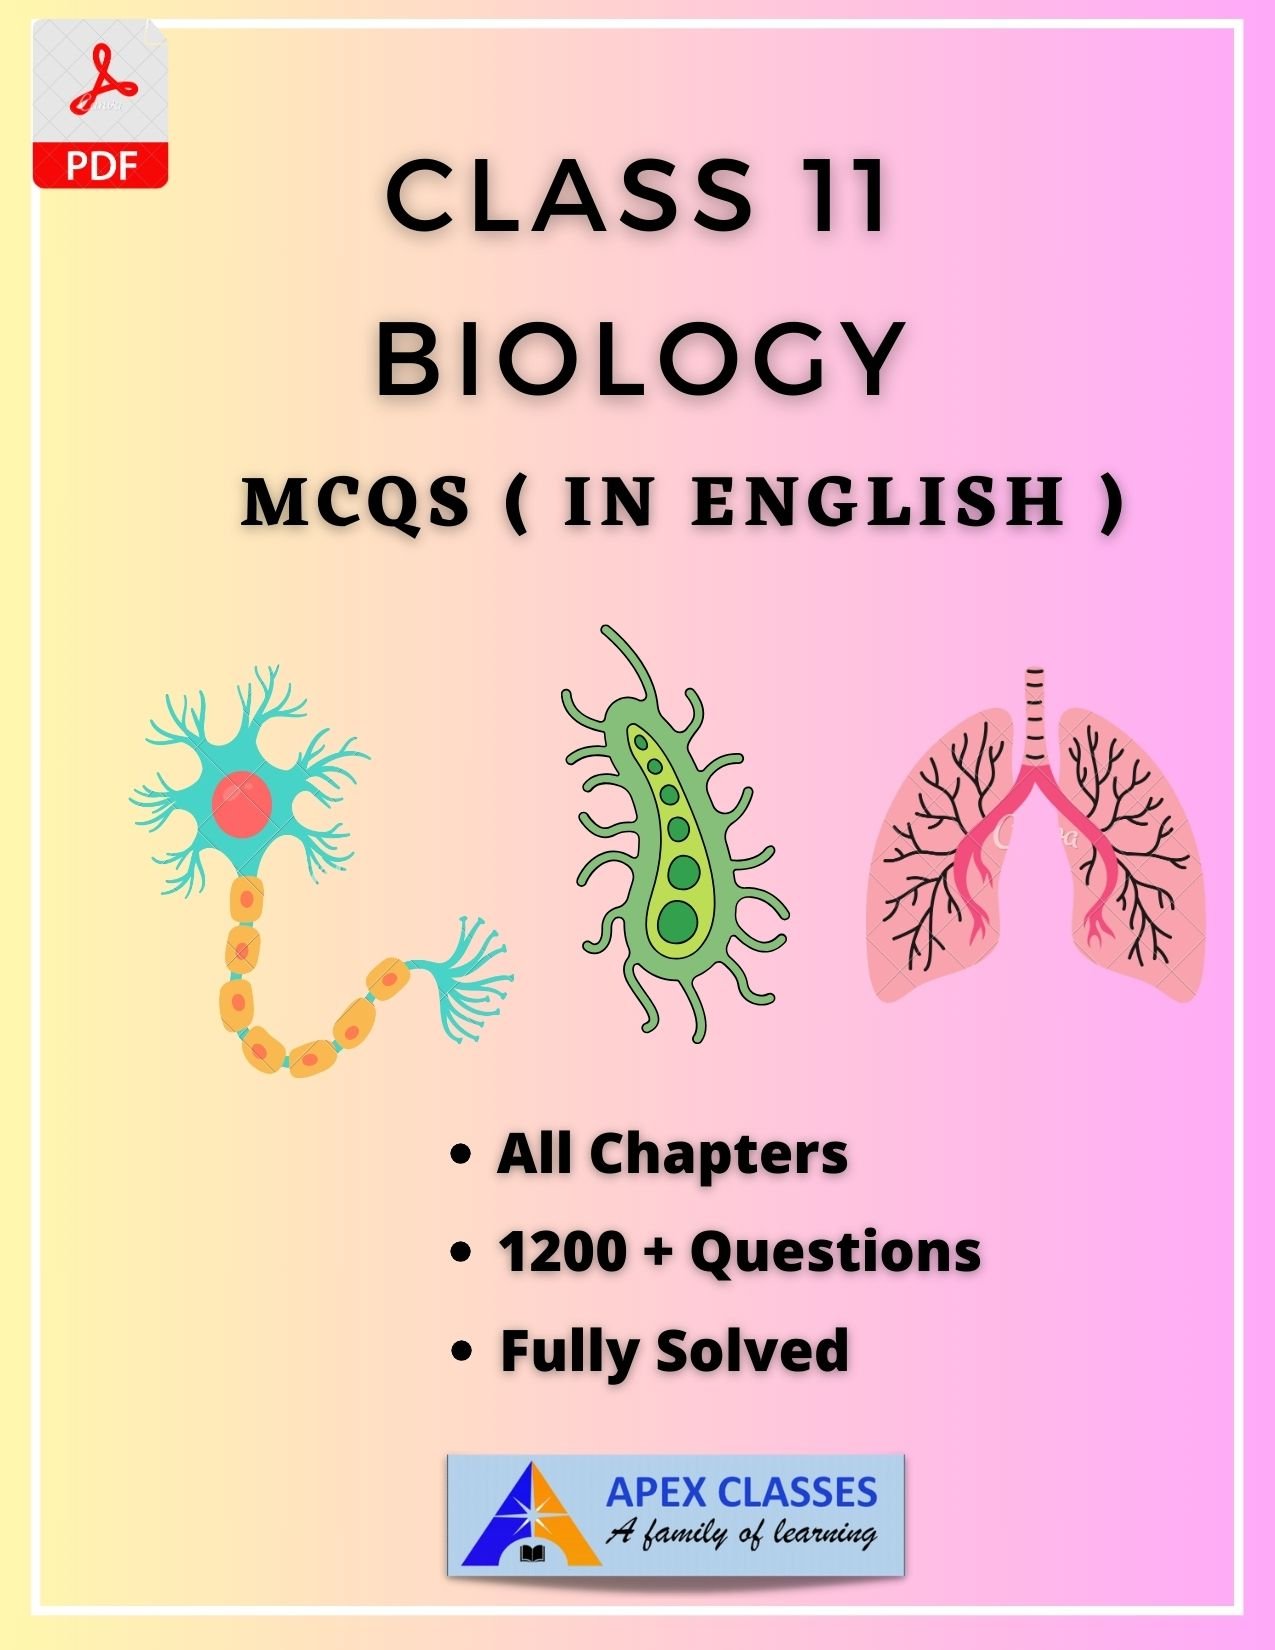 Class 11 Biology MCQs in English